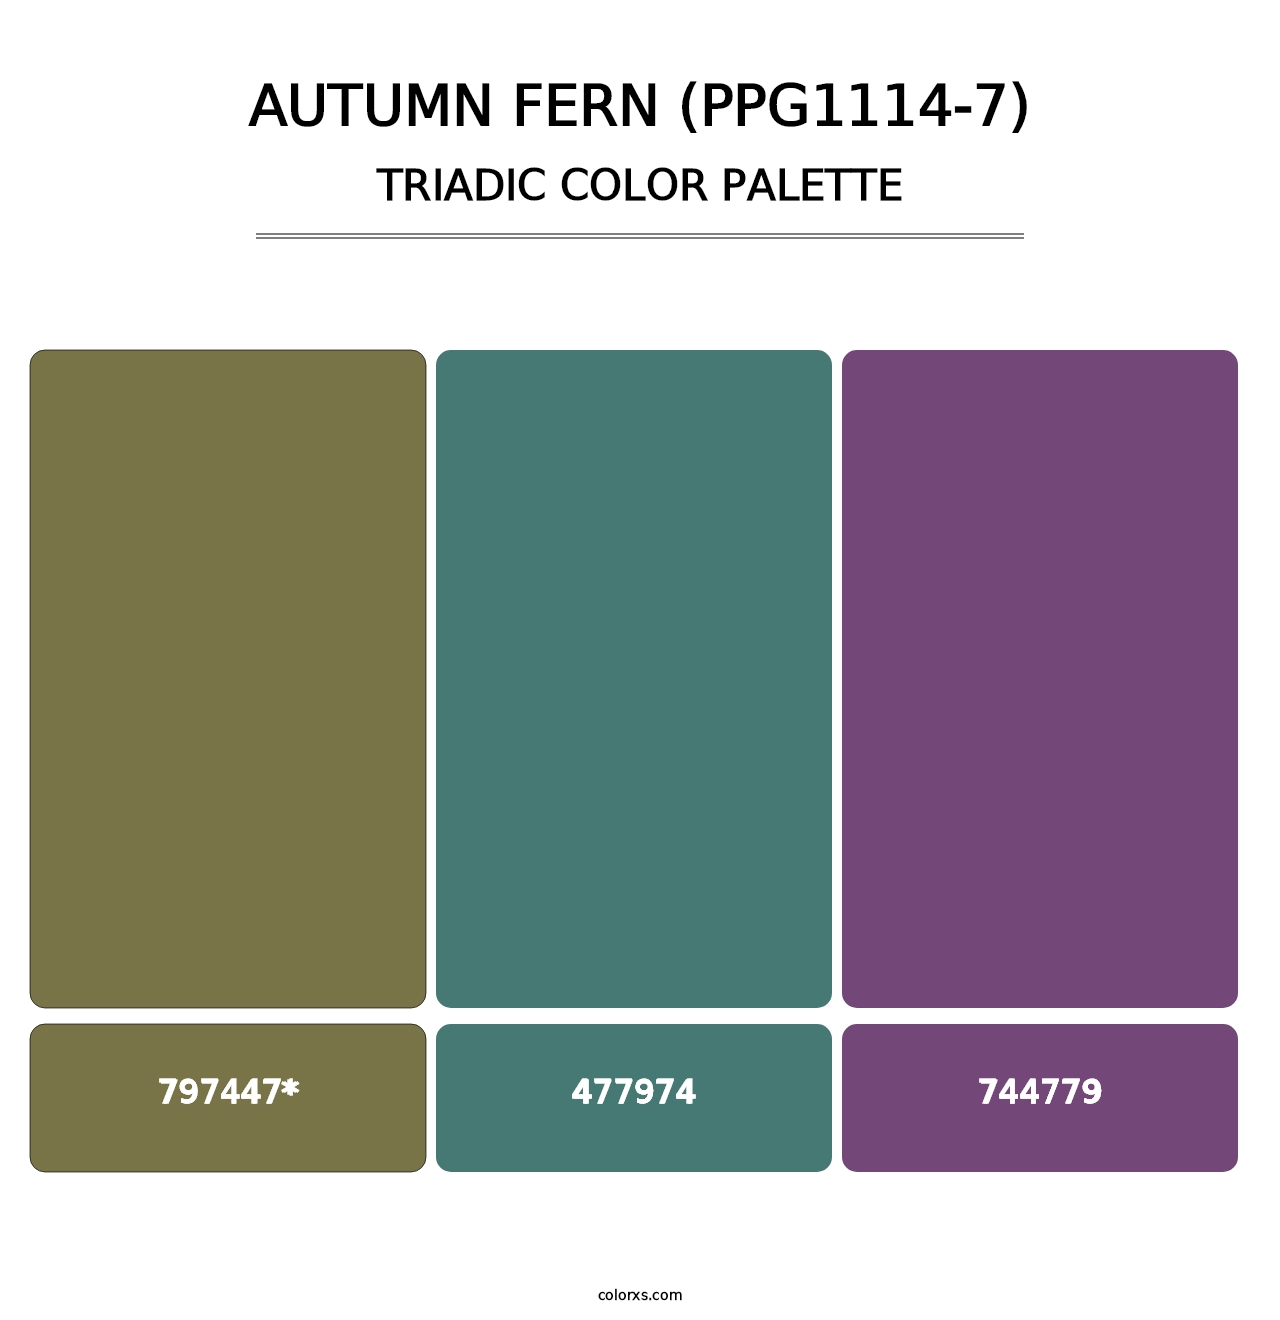 Autumn Fern (PPG1114-7) - Triadic Color Palette